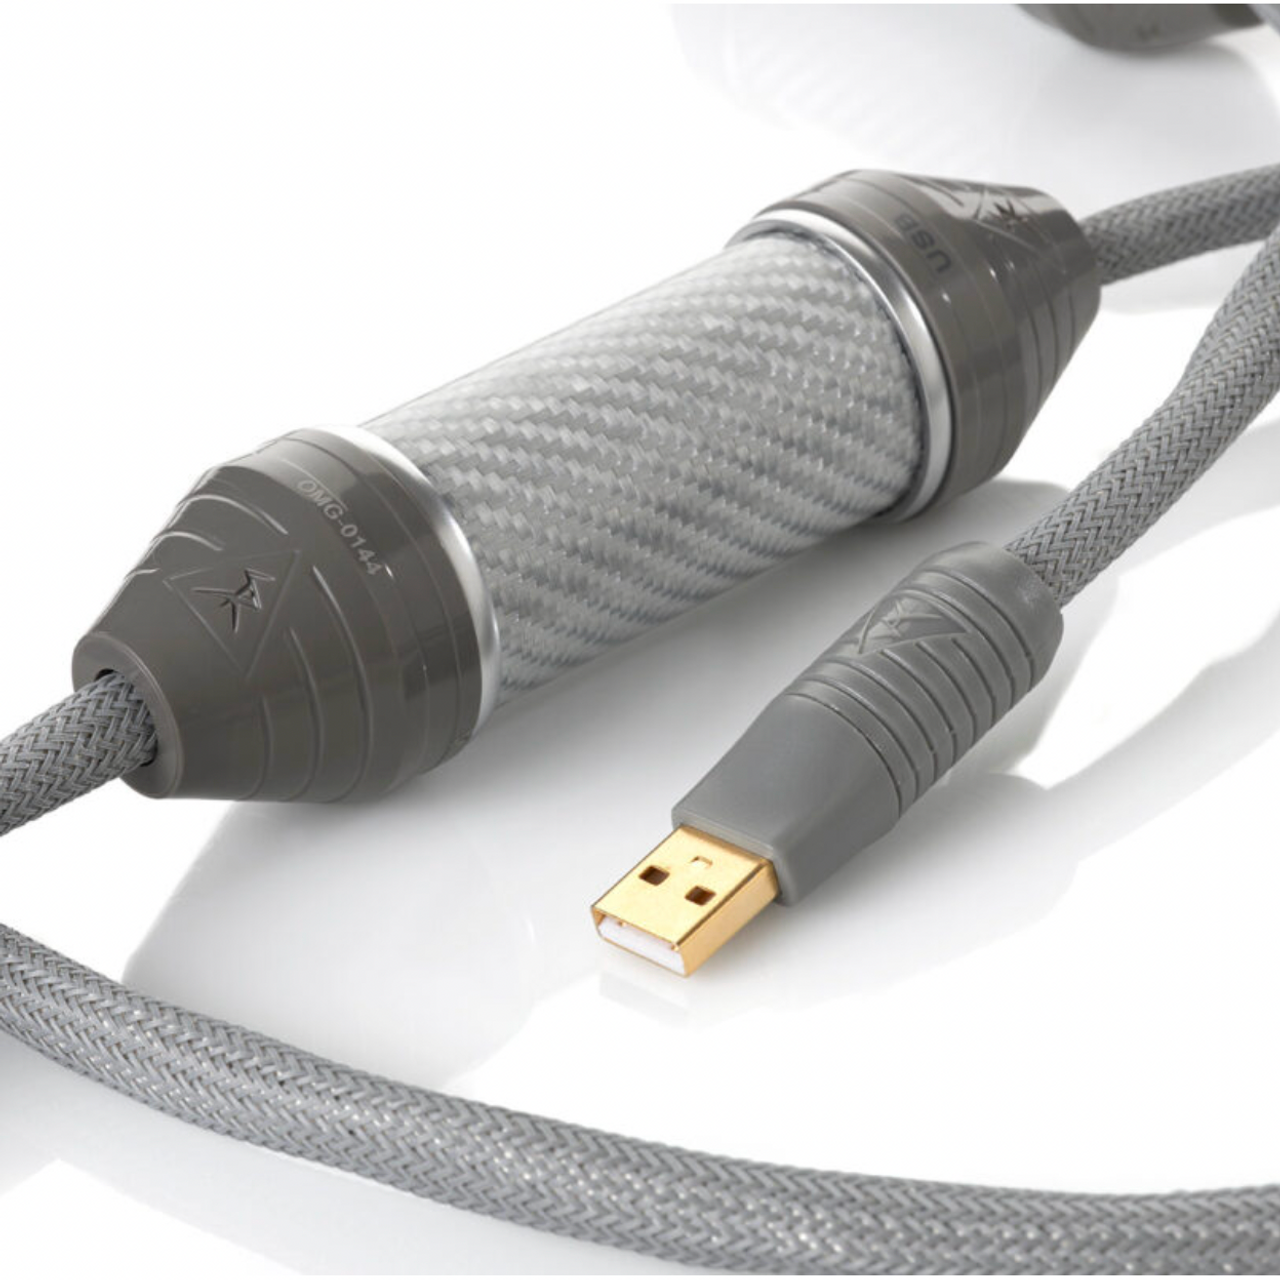 Shunyata Research Omega USB cable